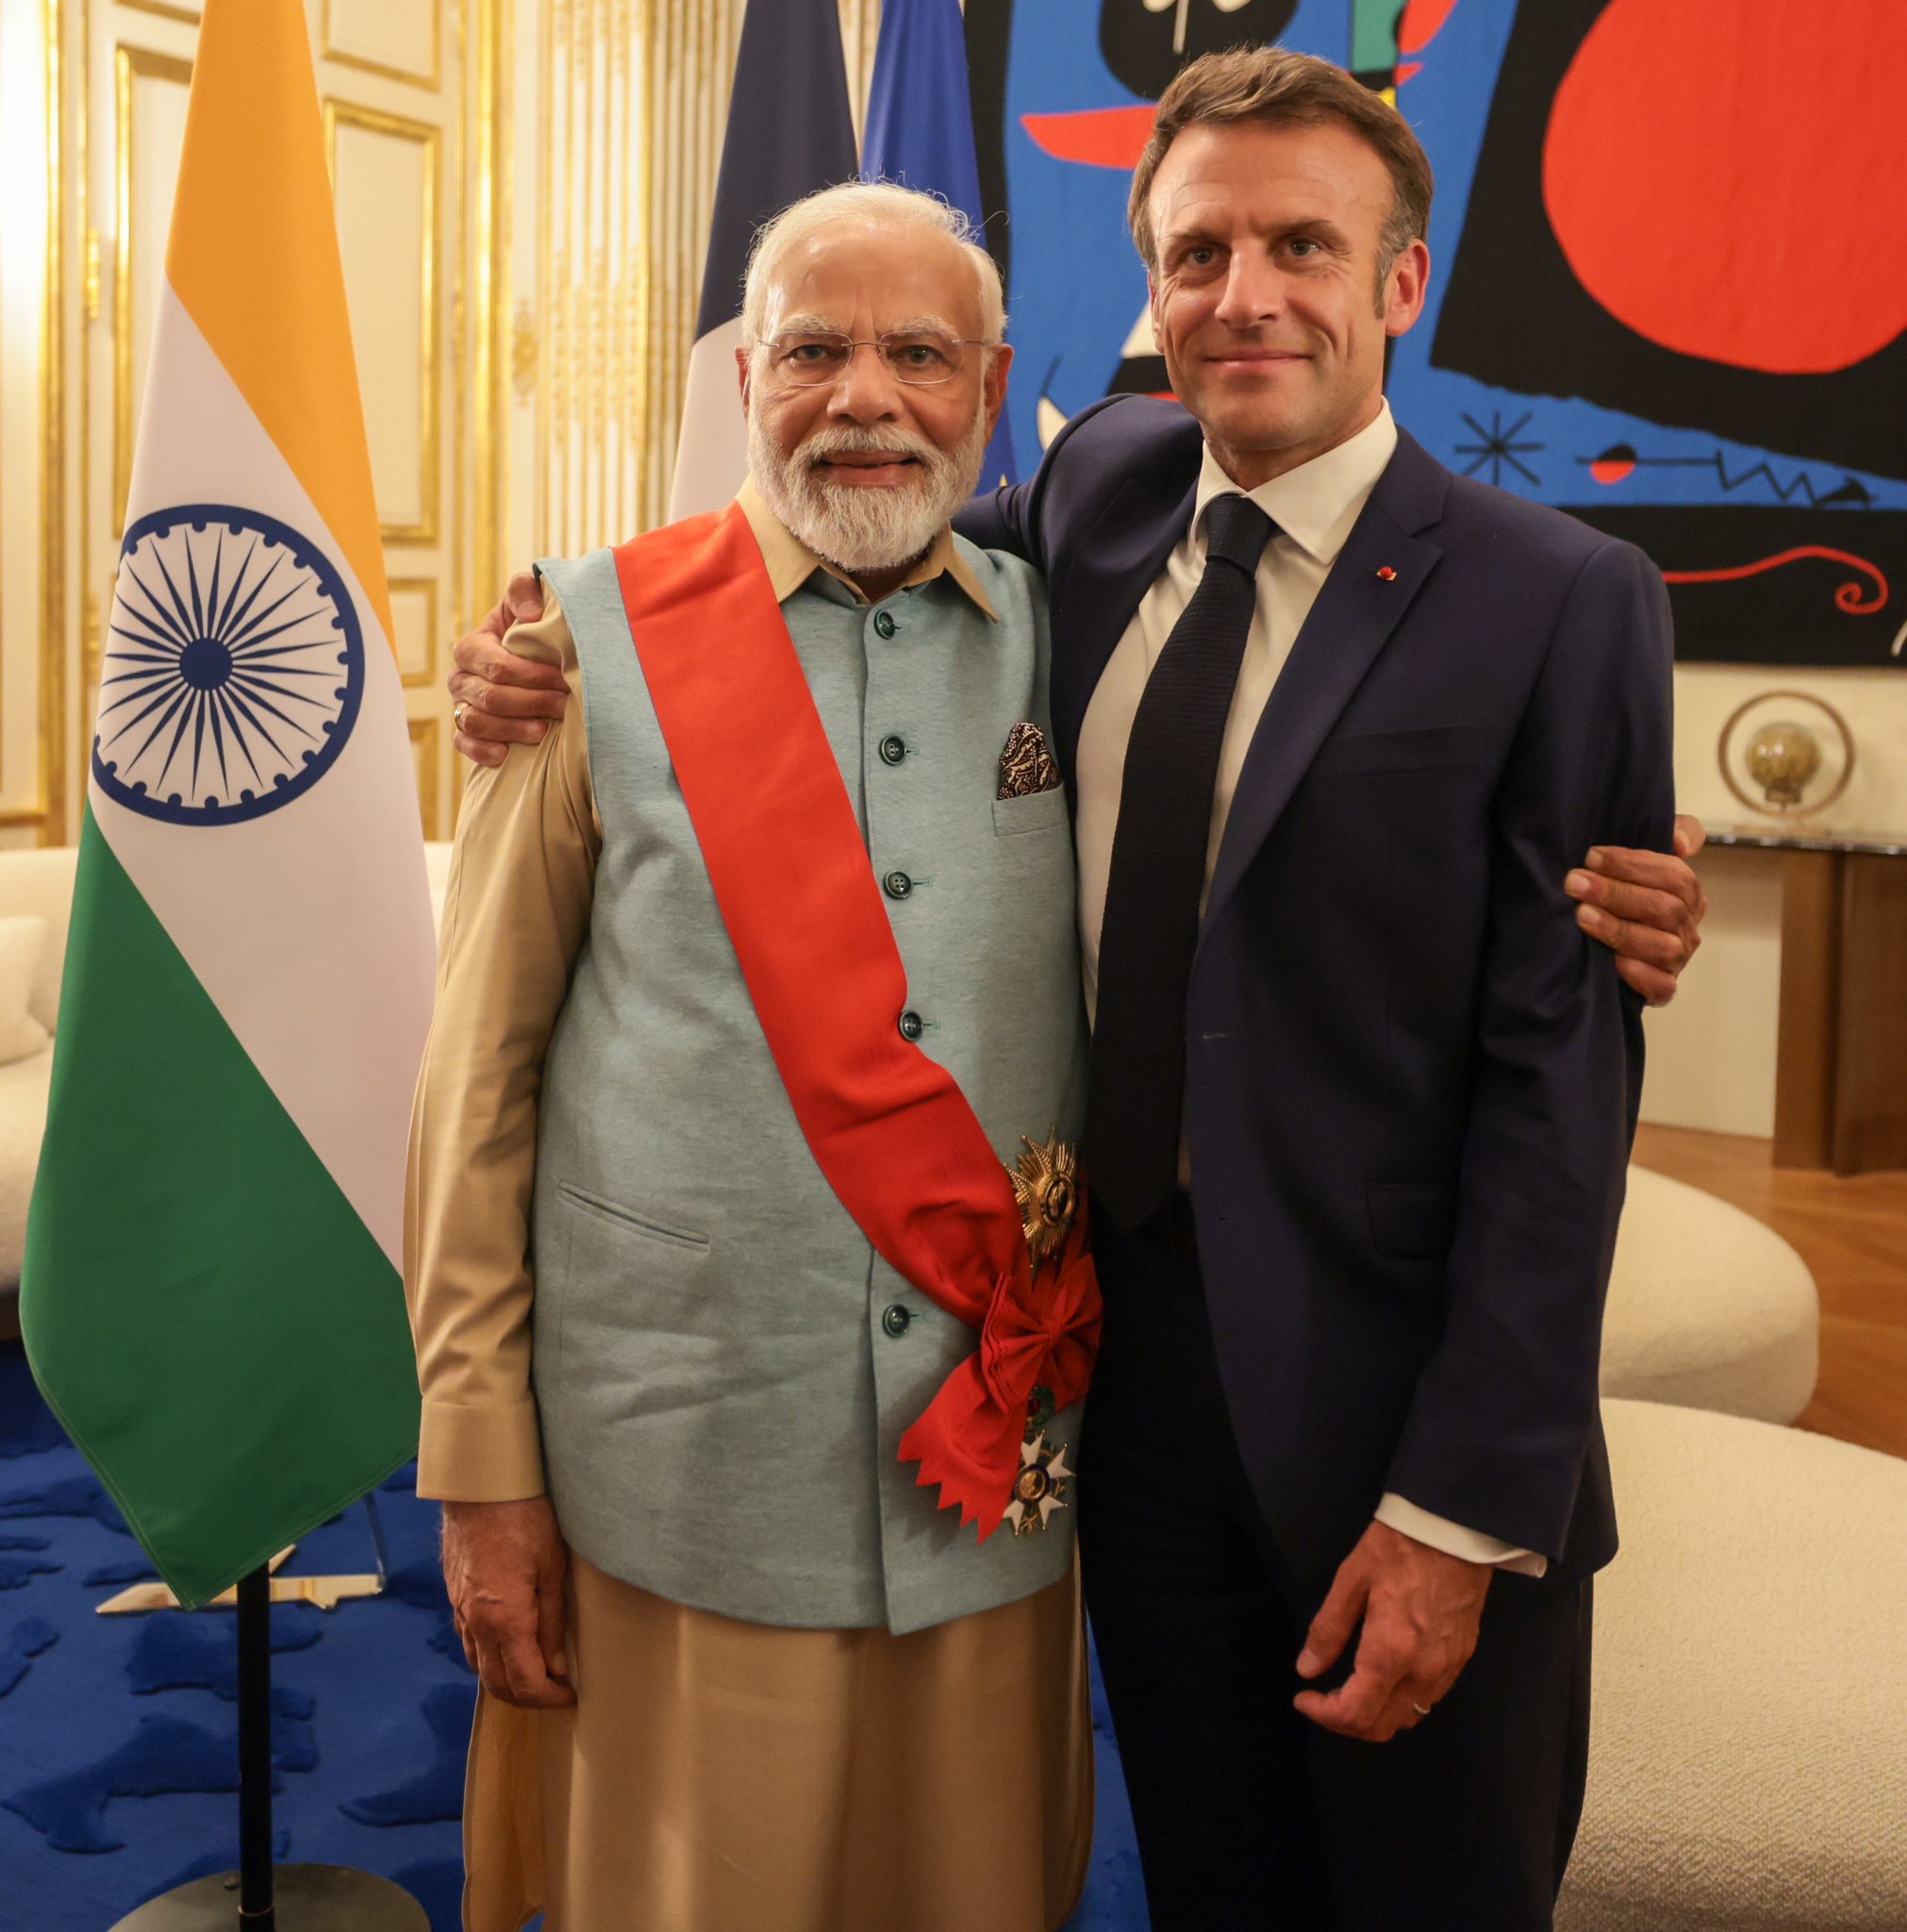 Prime Minister Narendra Modi Receives France’s Highest Honor